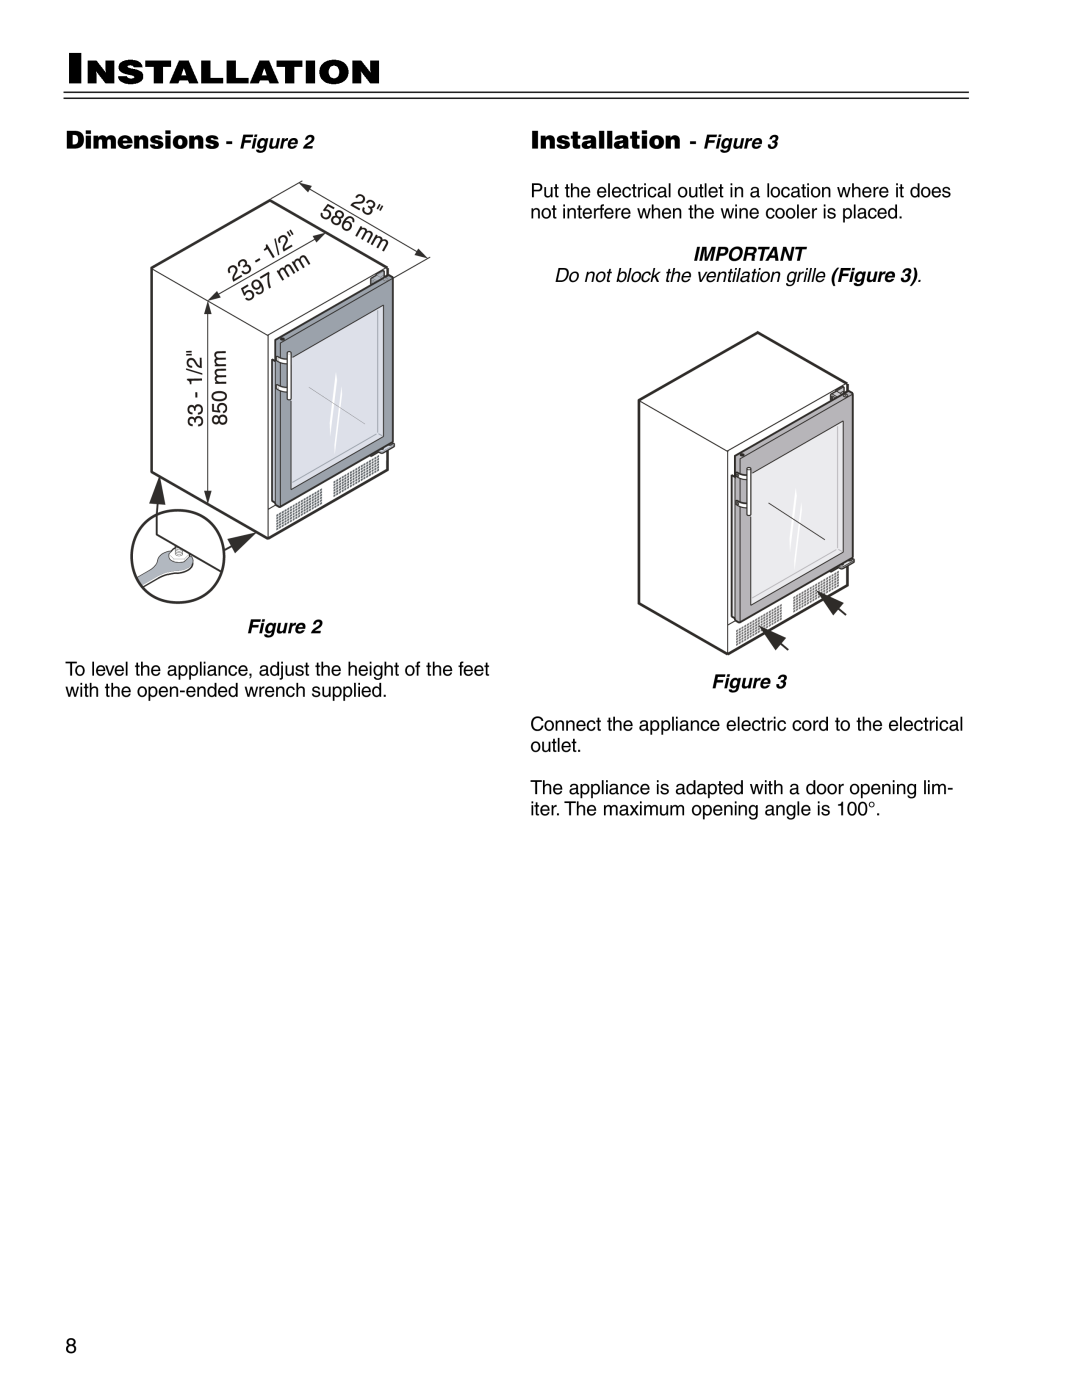 Liebherr WS 40 Dimensions - Figure, Installation - Figure, Do not block the ventilation grille Figure 